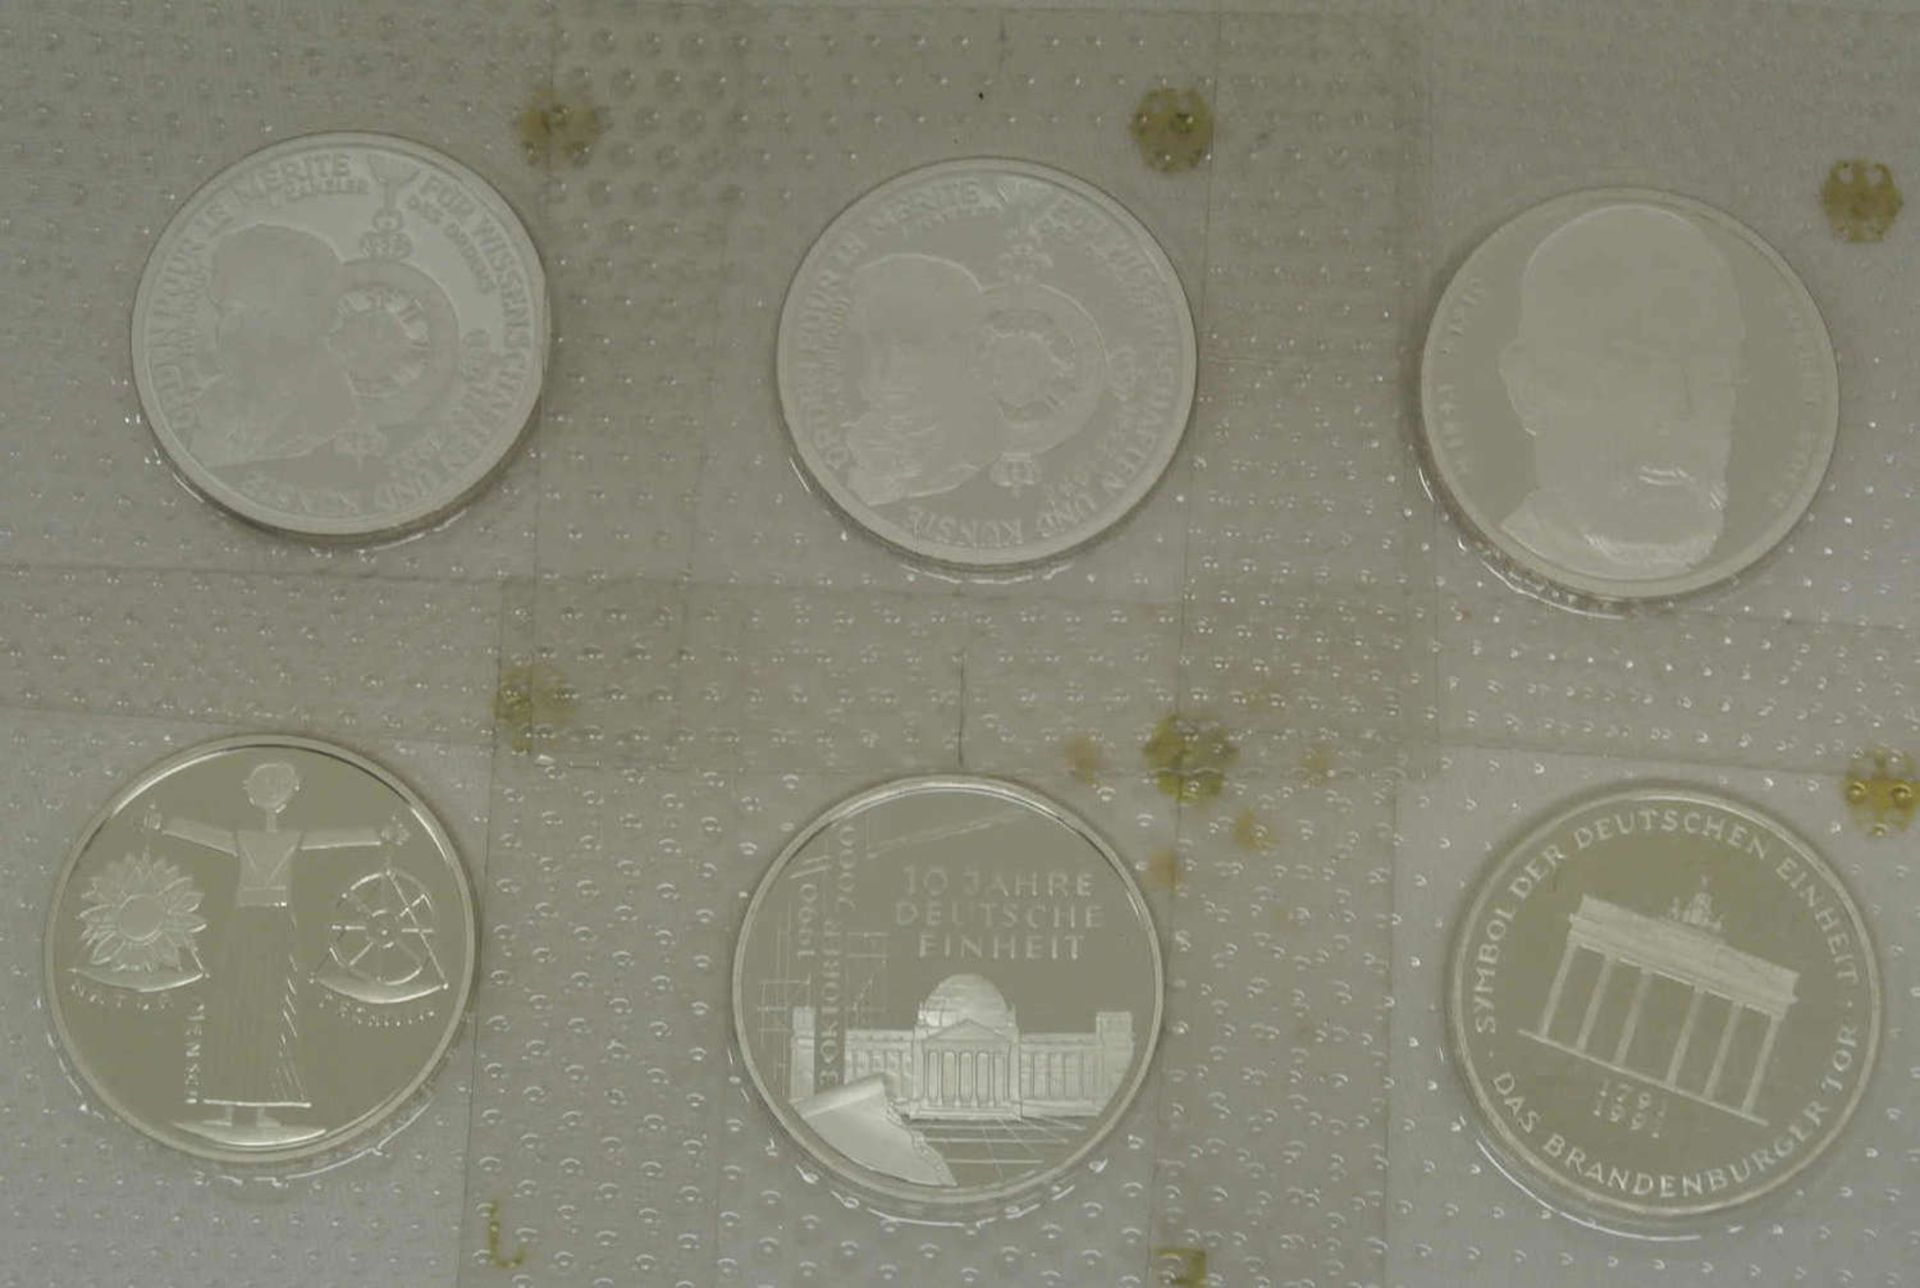 Lot 10 DM Münzen, Silber, insgesamt 6 Stück, Jahrgang 1x 1991, 2x 1992, 1x 1993, 2x 2000.